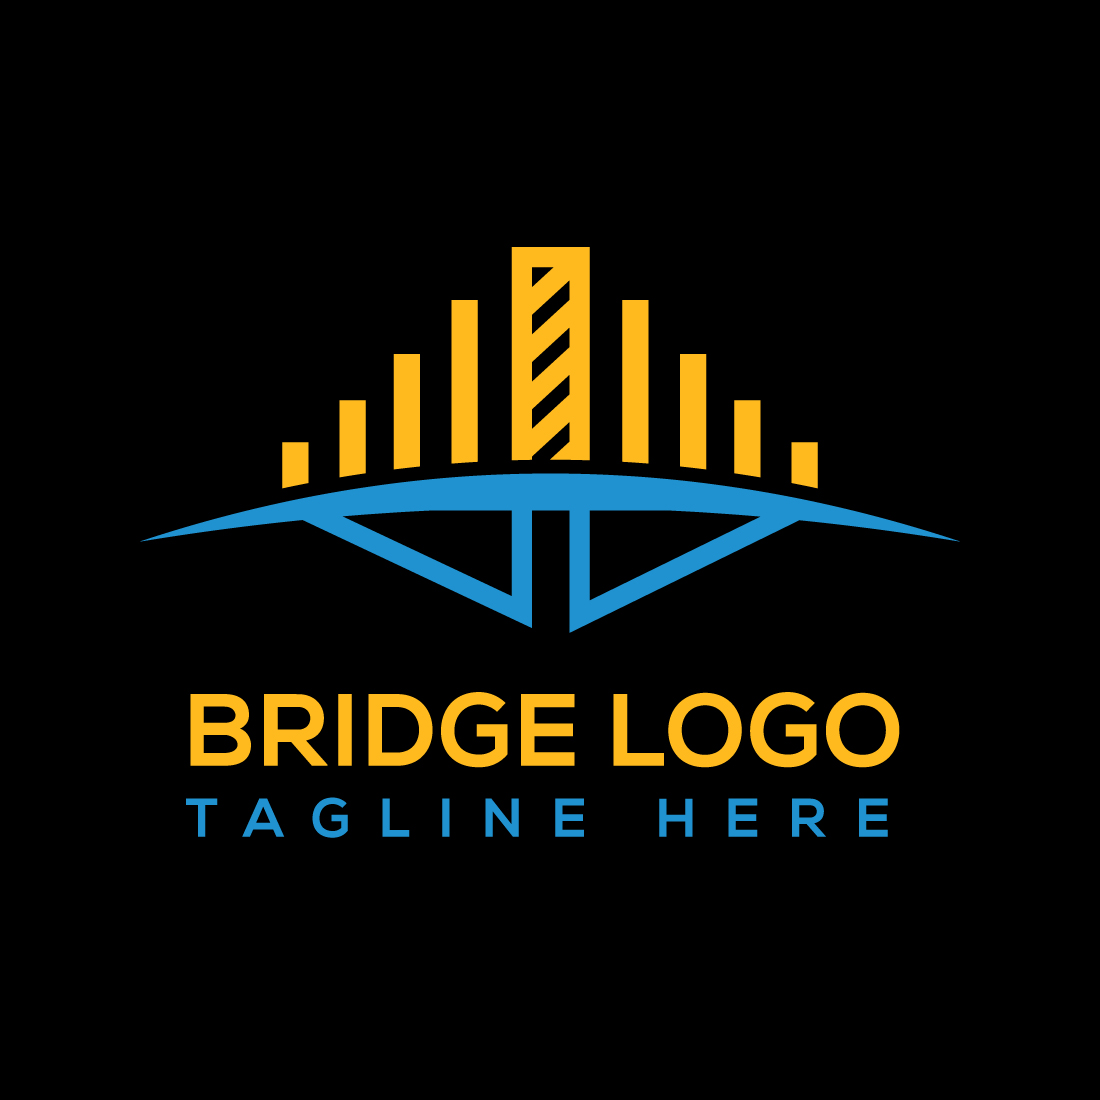 Modern Bridge Logo Template with black background.